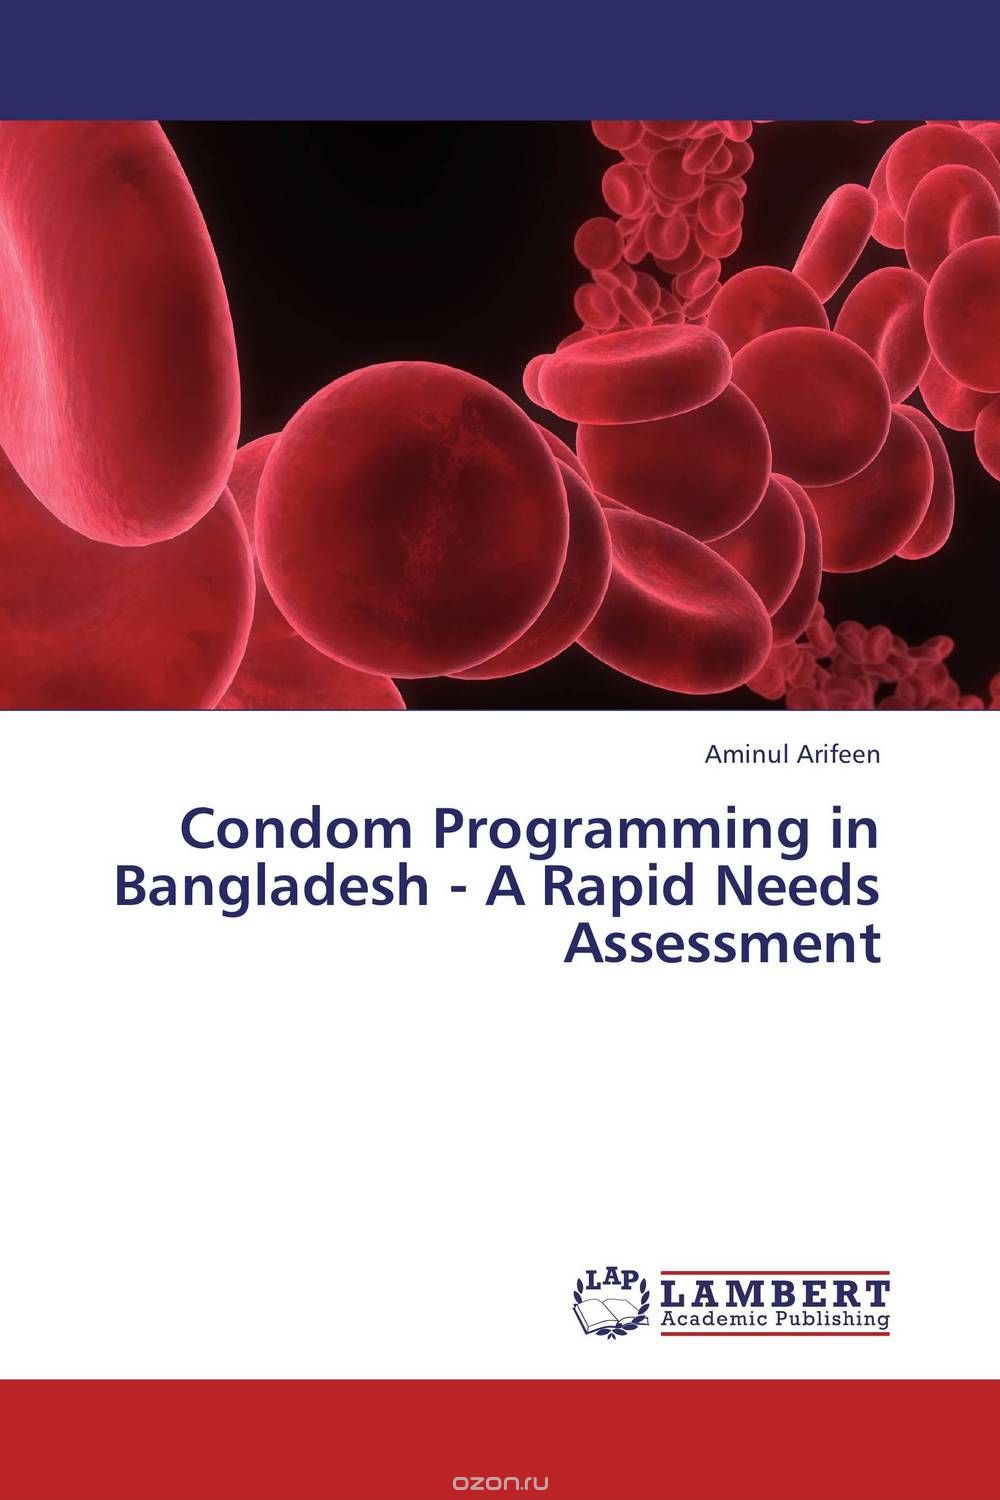 Скачать книгу "Condom Programming in Bangladesh - A Rapid Needs Assessment"